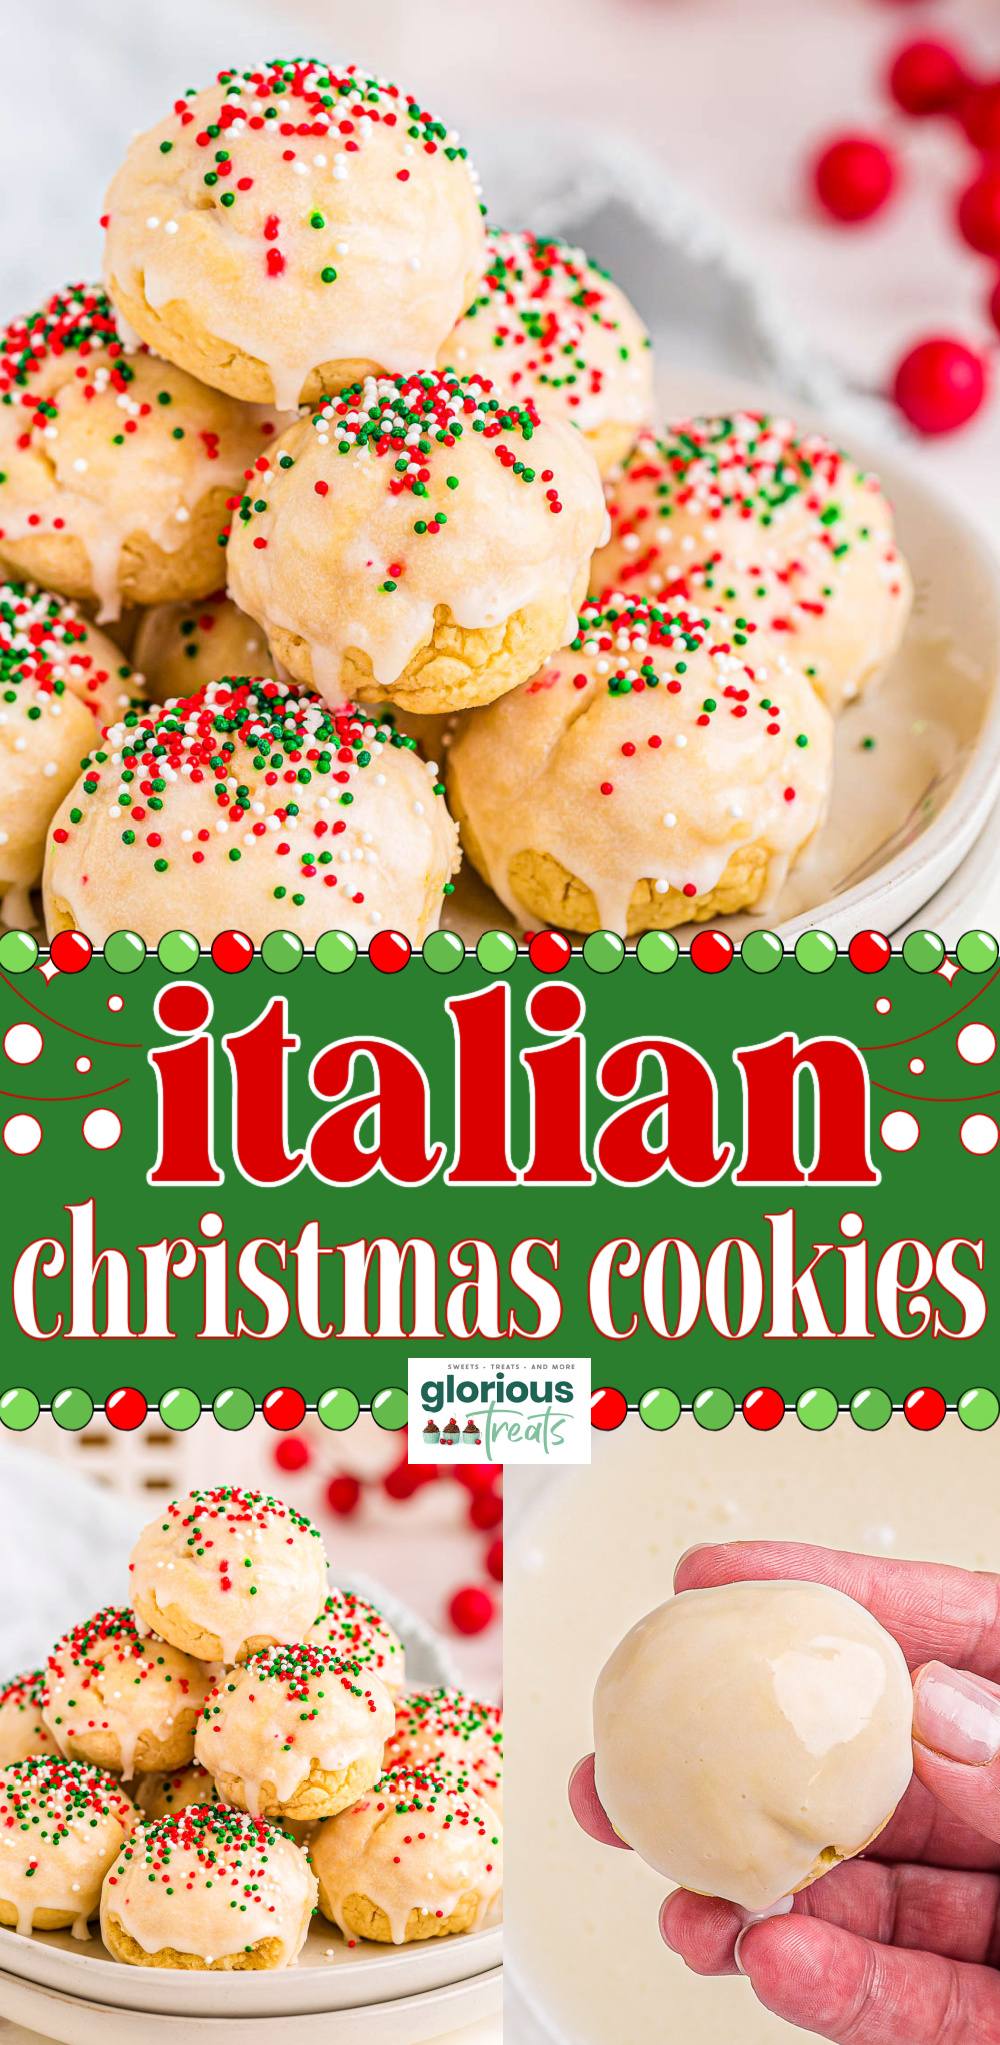 The BEST Italian Christmas Cookies - Glorious Treats